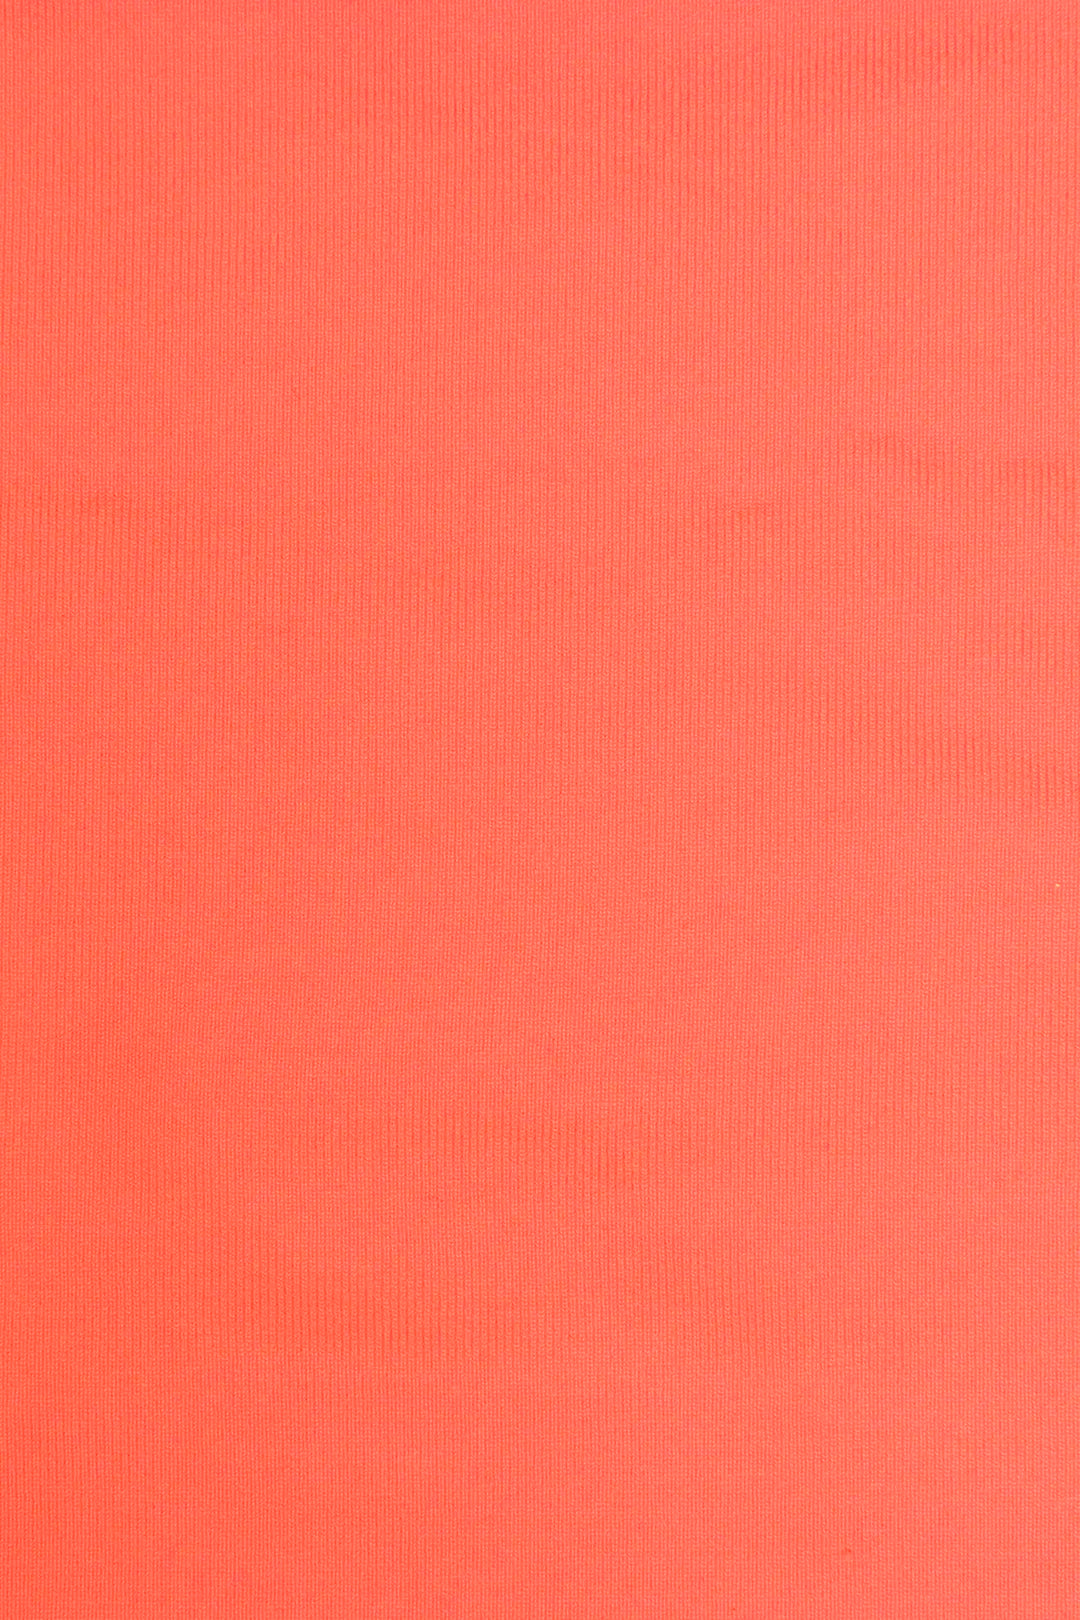 Orange Nylon Spandex Stretch Fabric